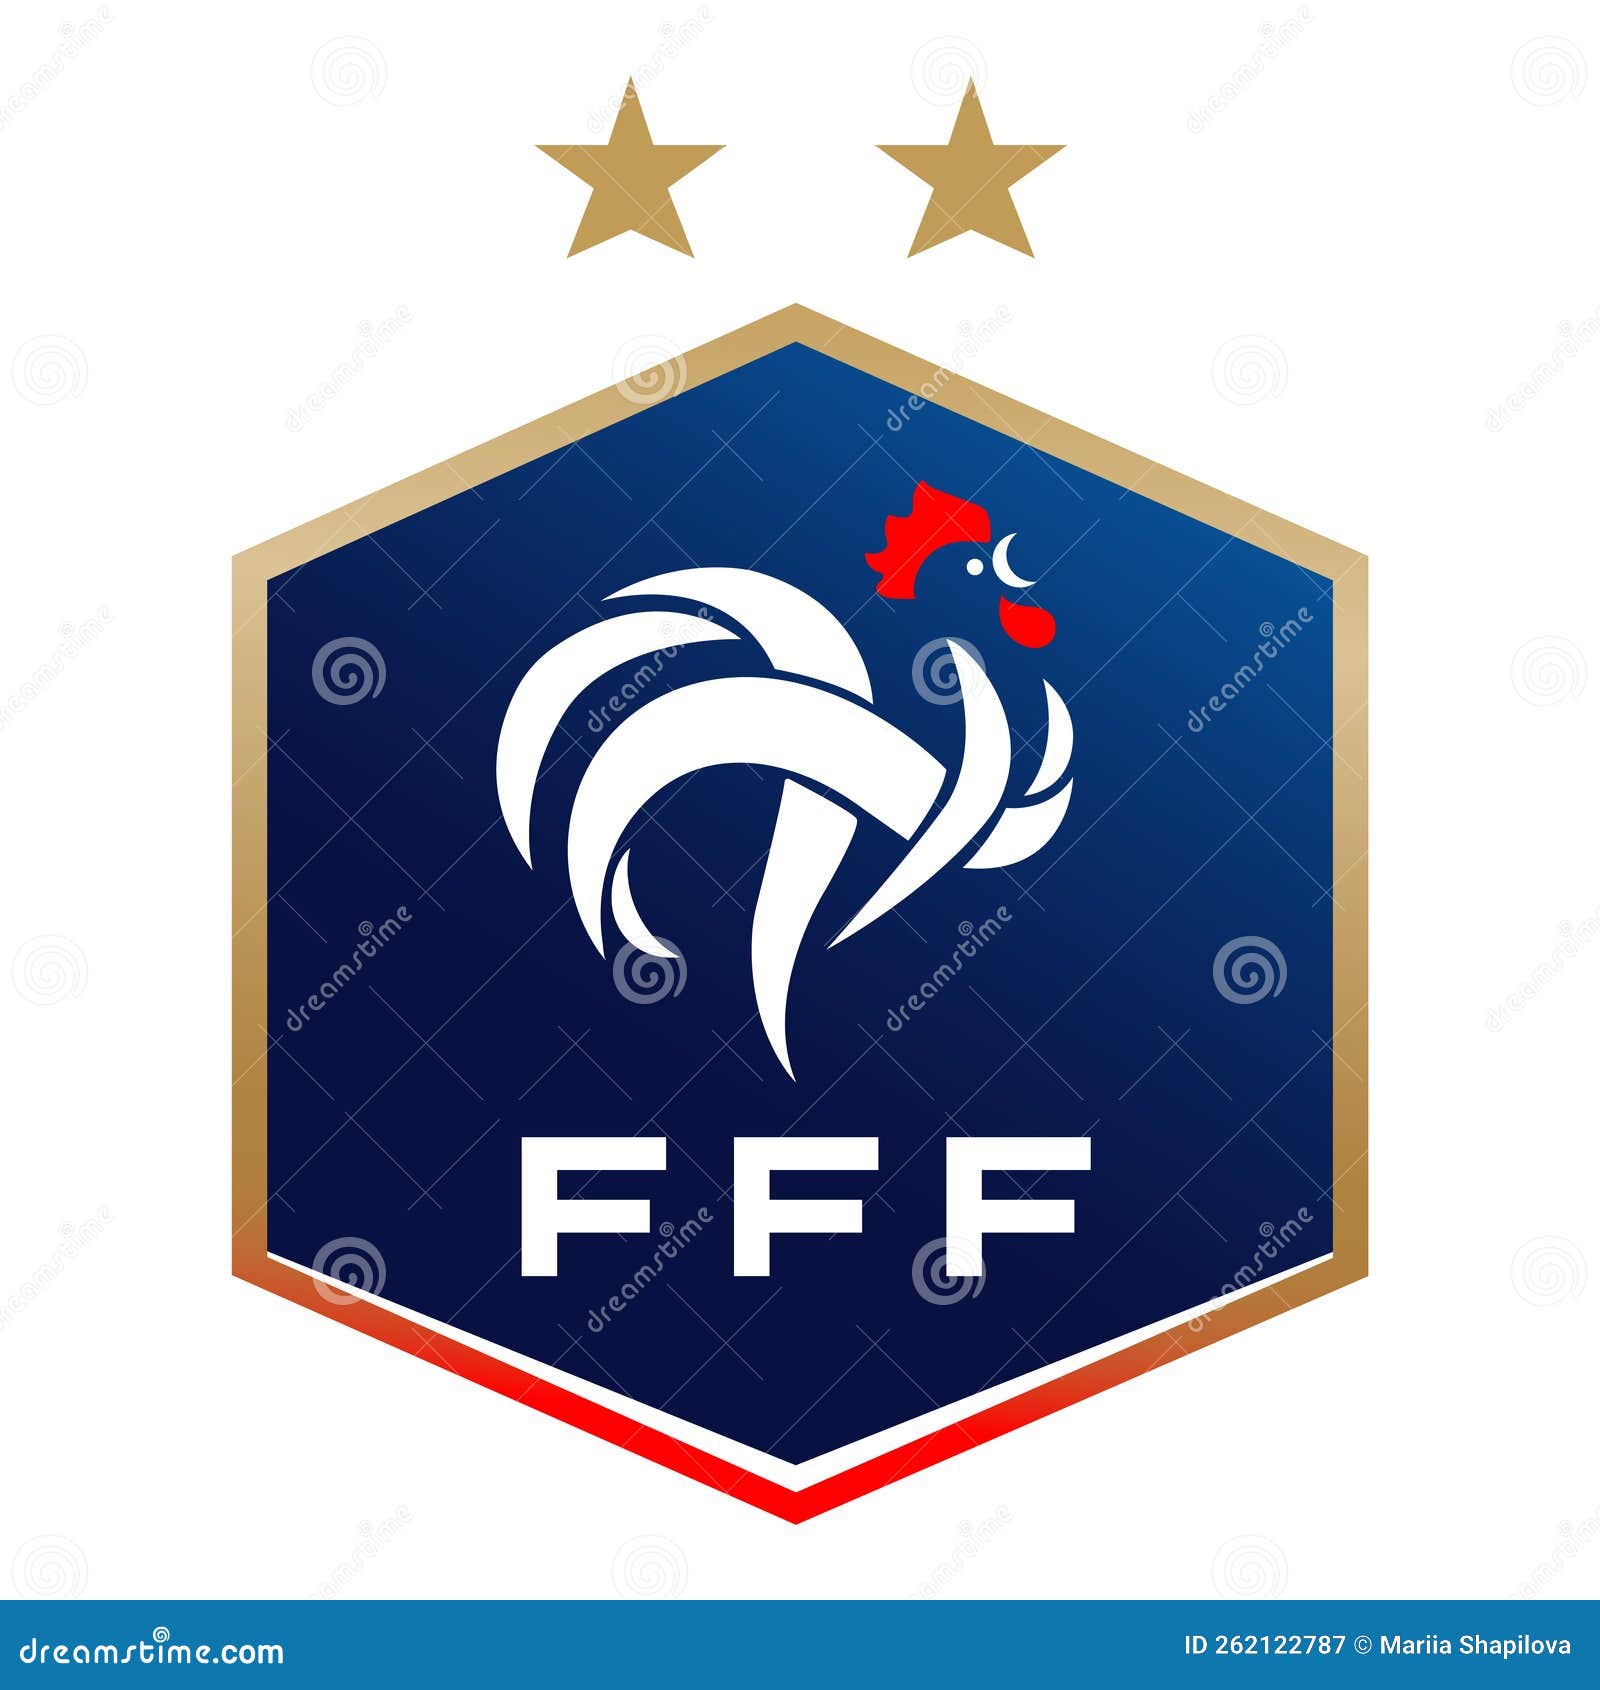 Premium Vector | France team badge for football tournament